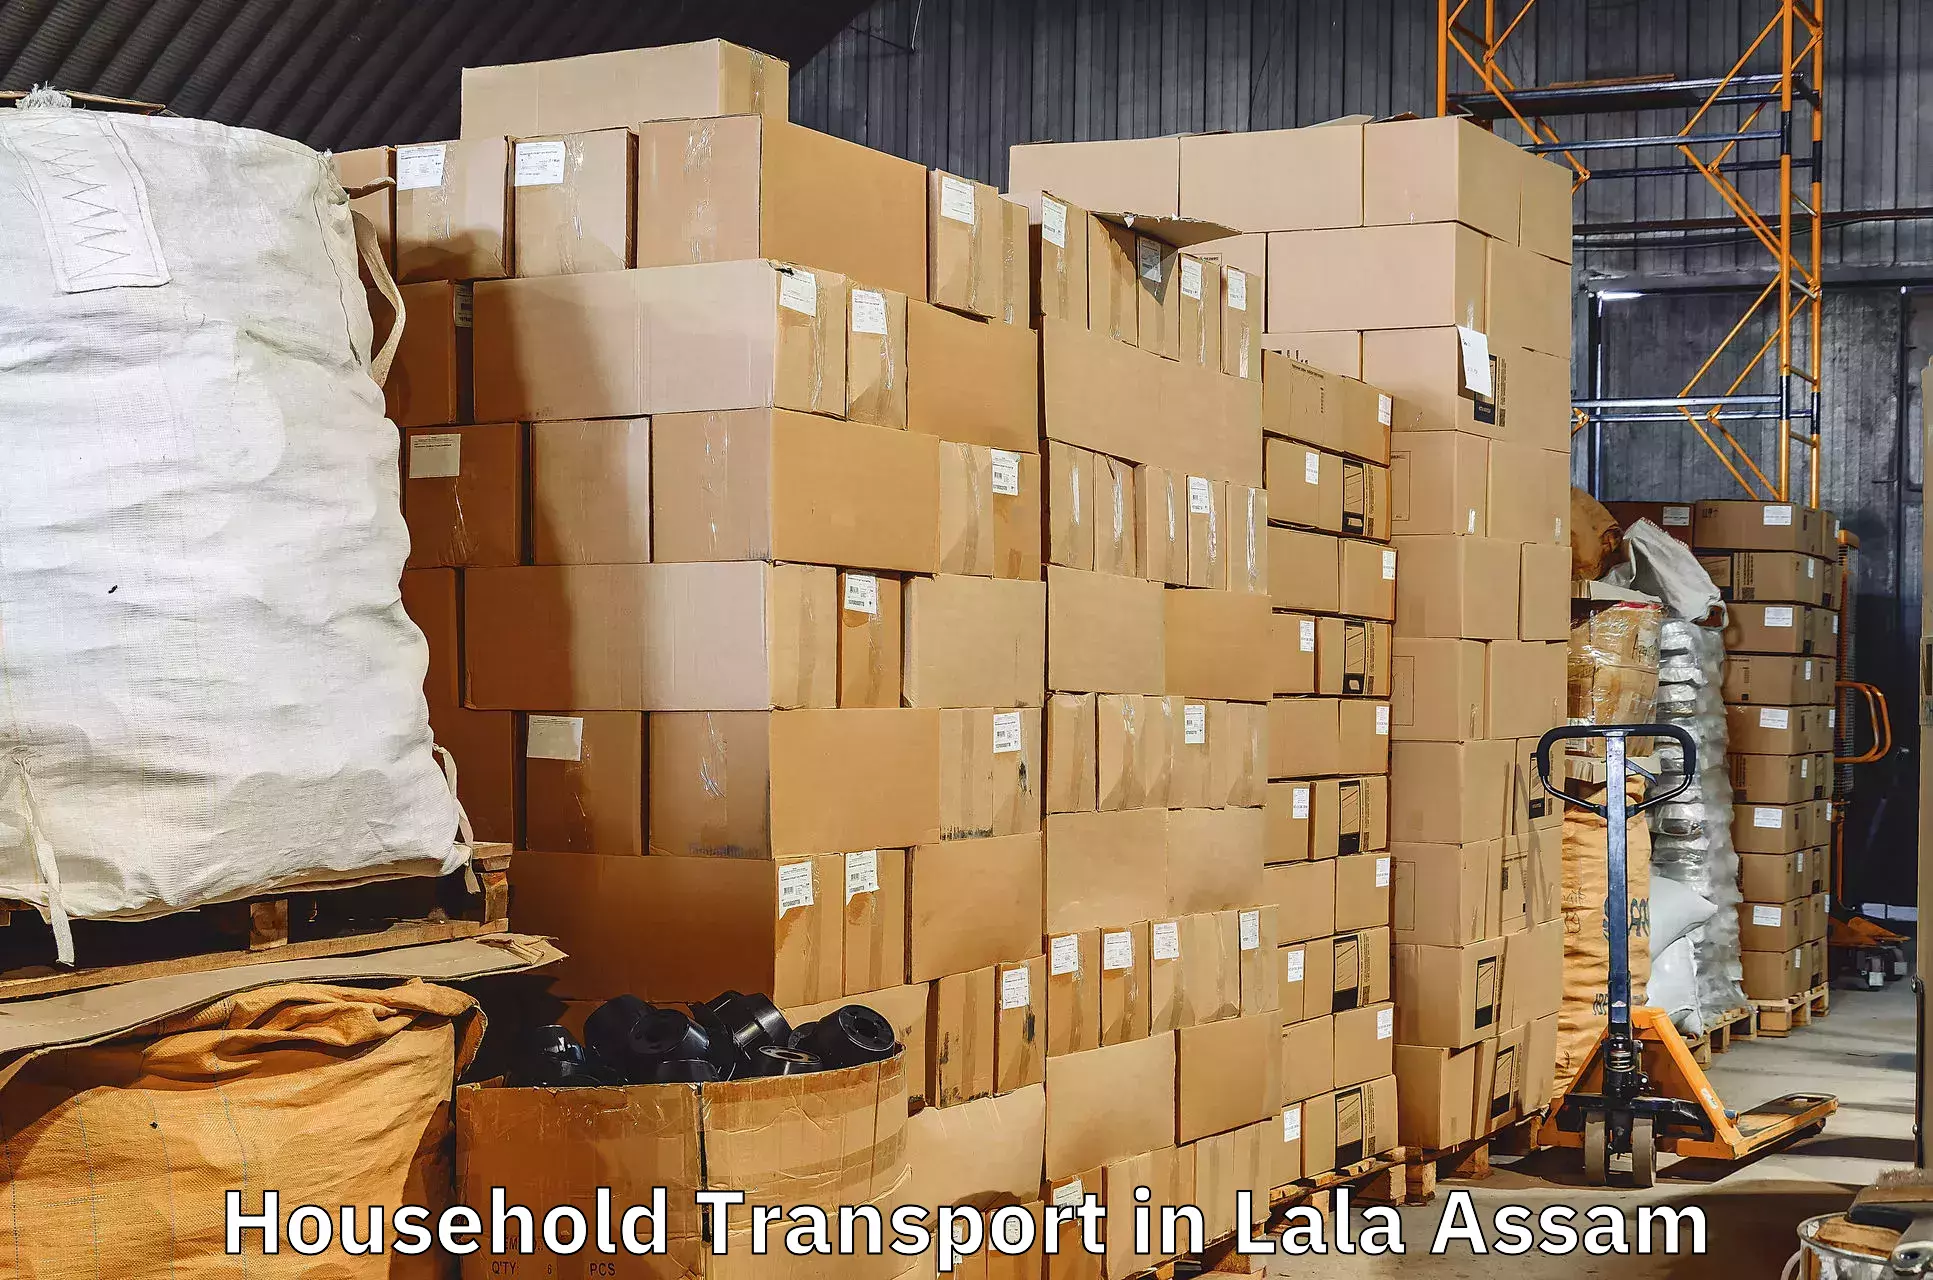 Household goods transport service in Lala Assam